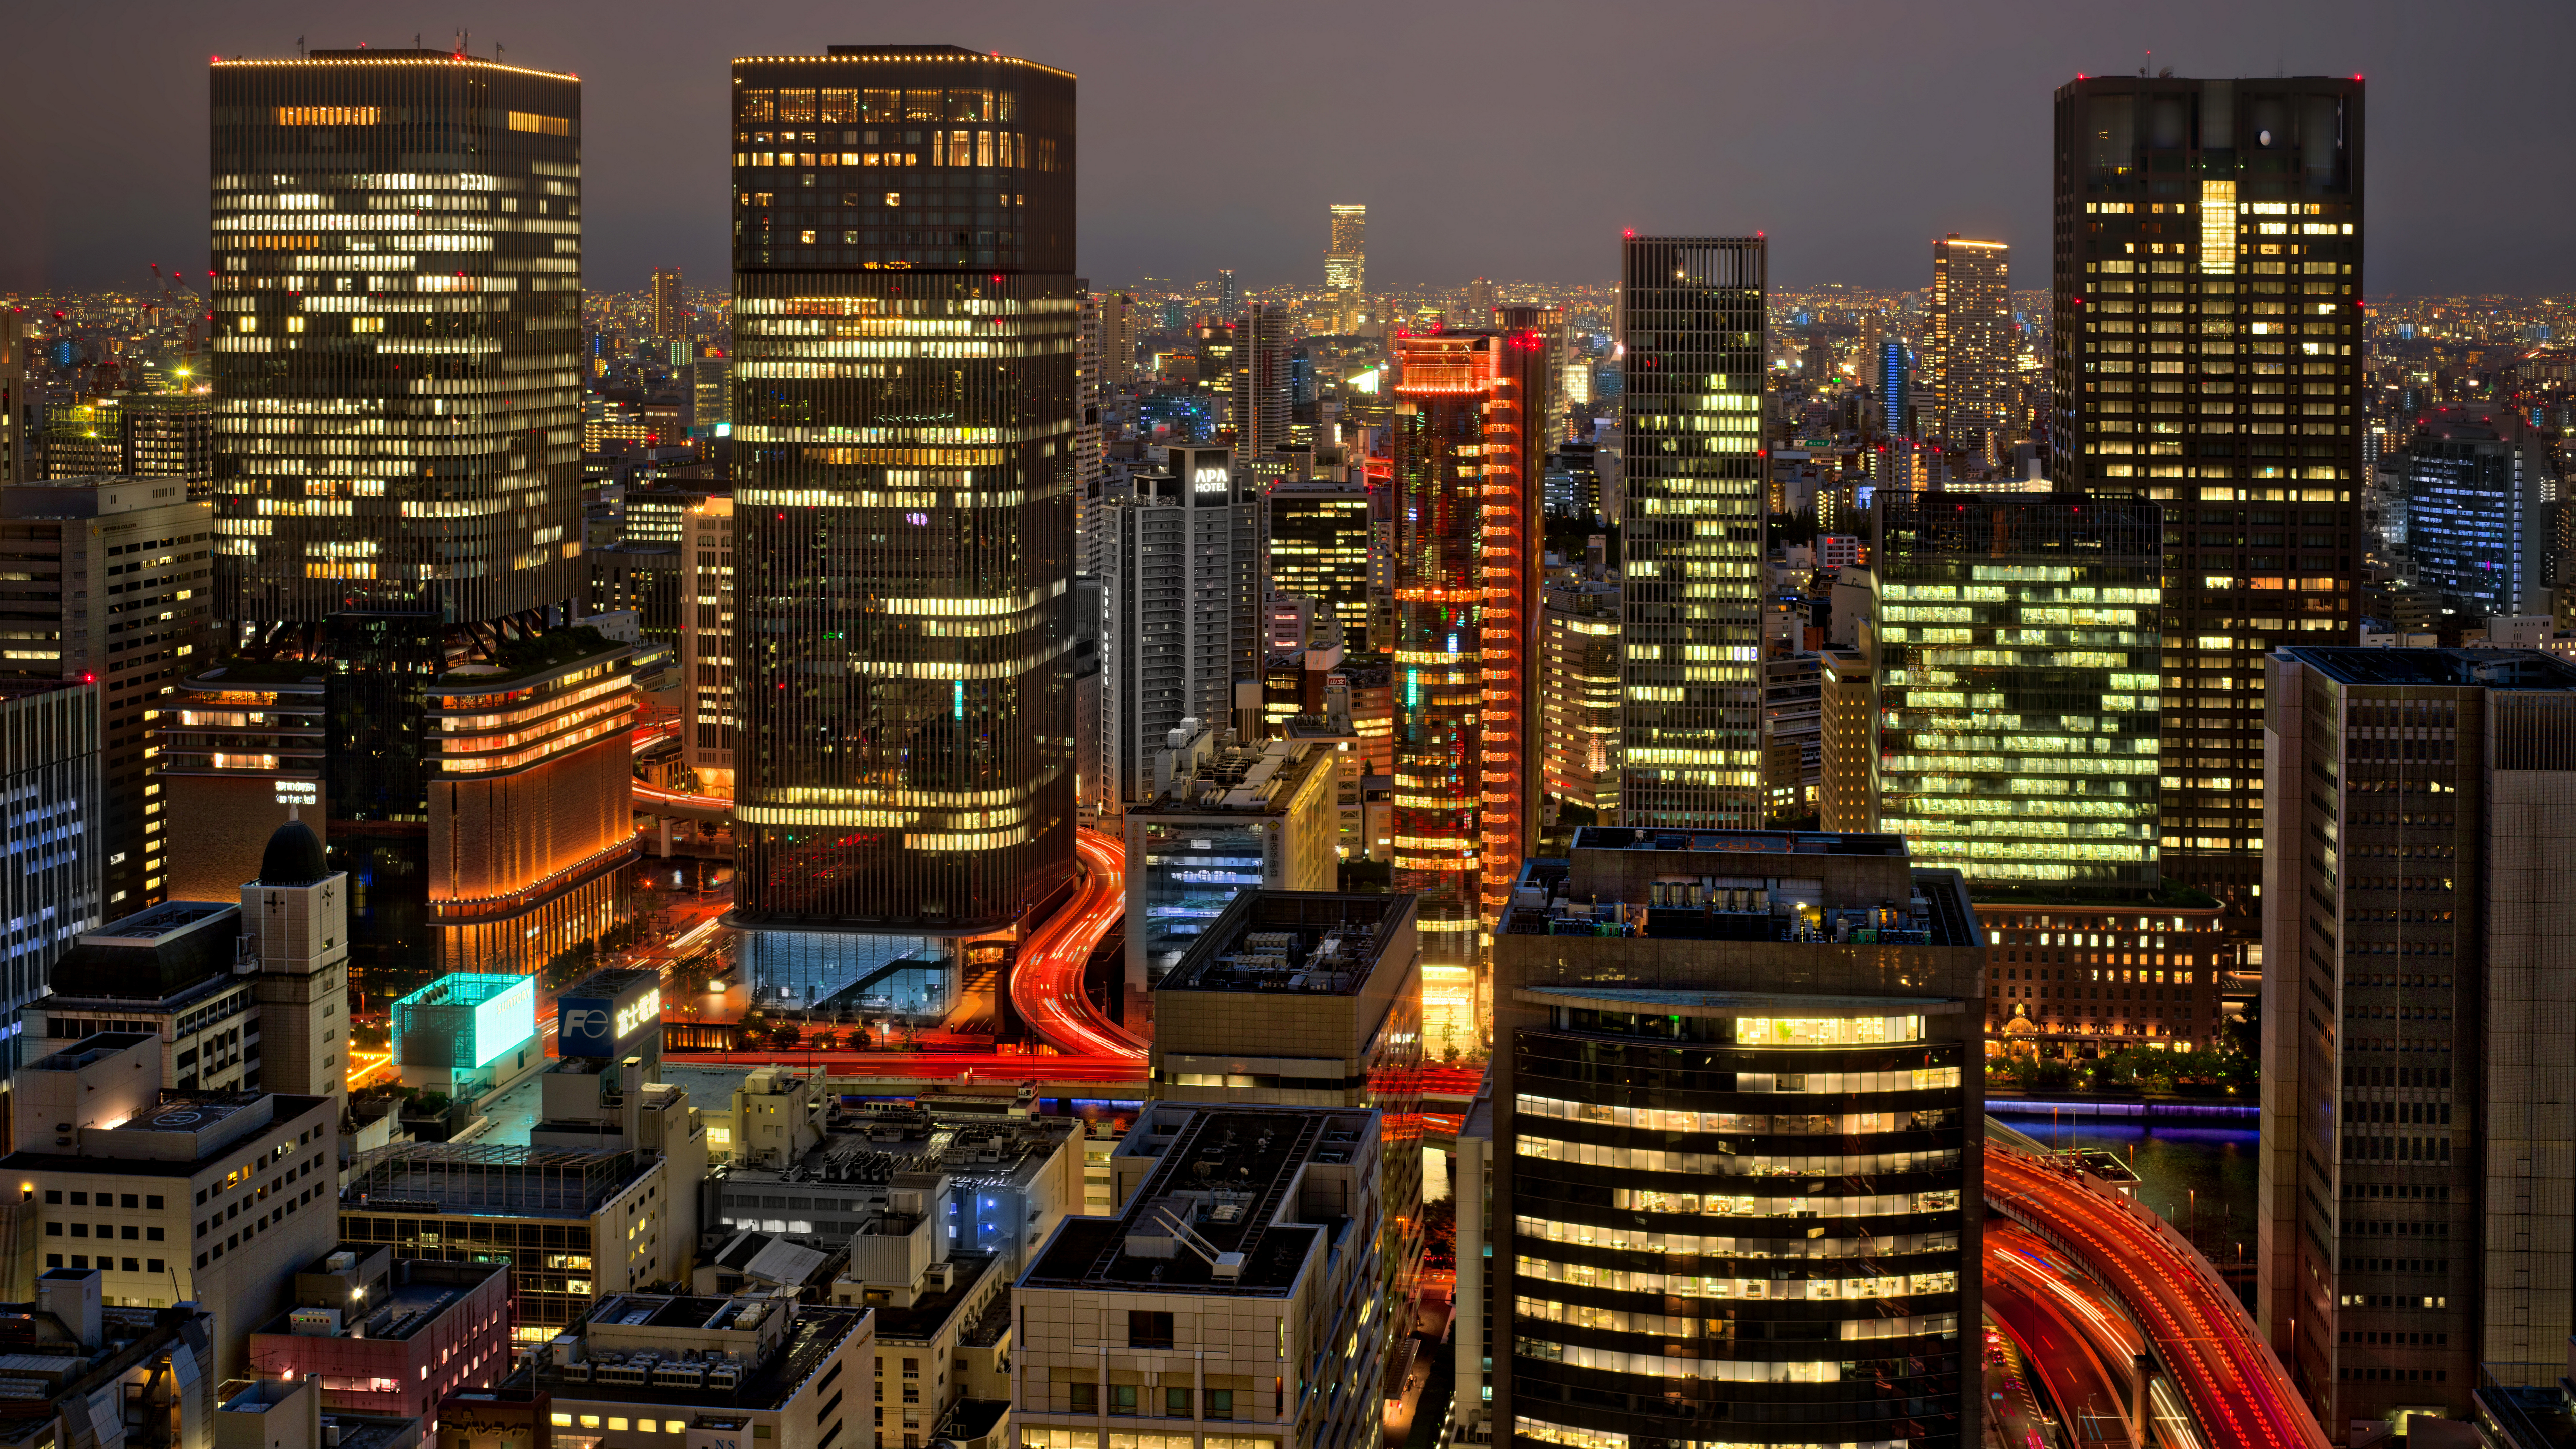 General 7680x4320 Trey Ratcliff photography Japan Osaka building lights city